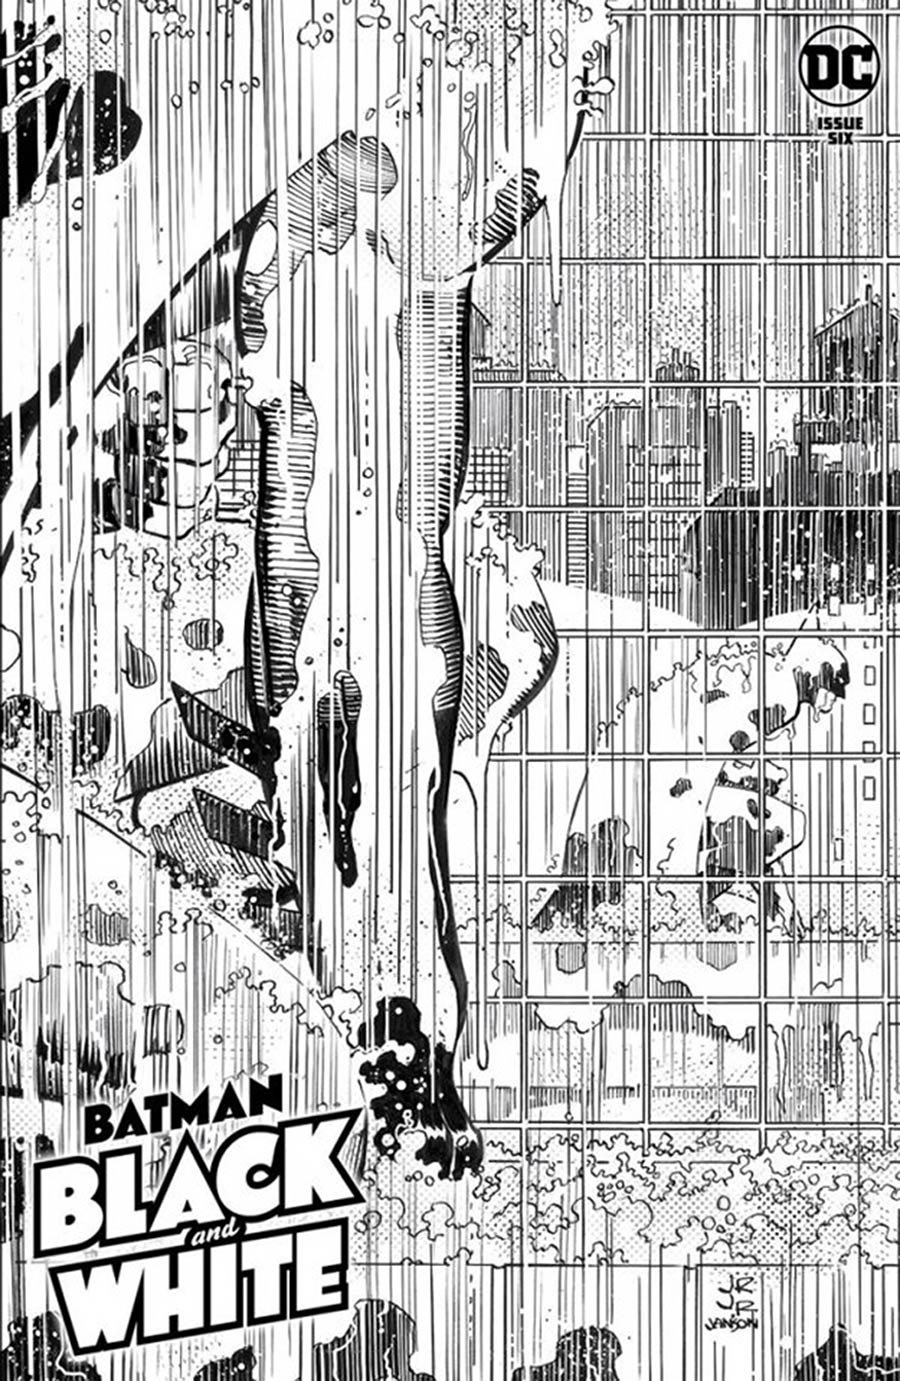 Batman Black & White Vol 3 #6 Cover E DF John Romita Jr